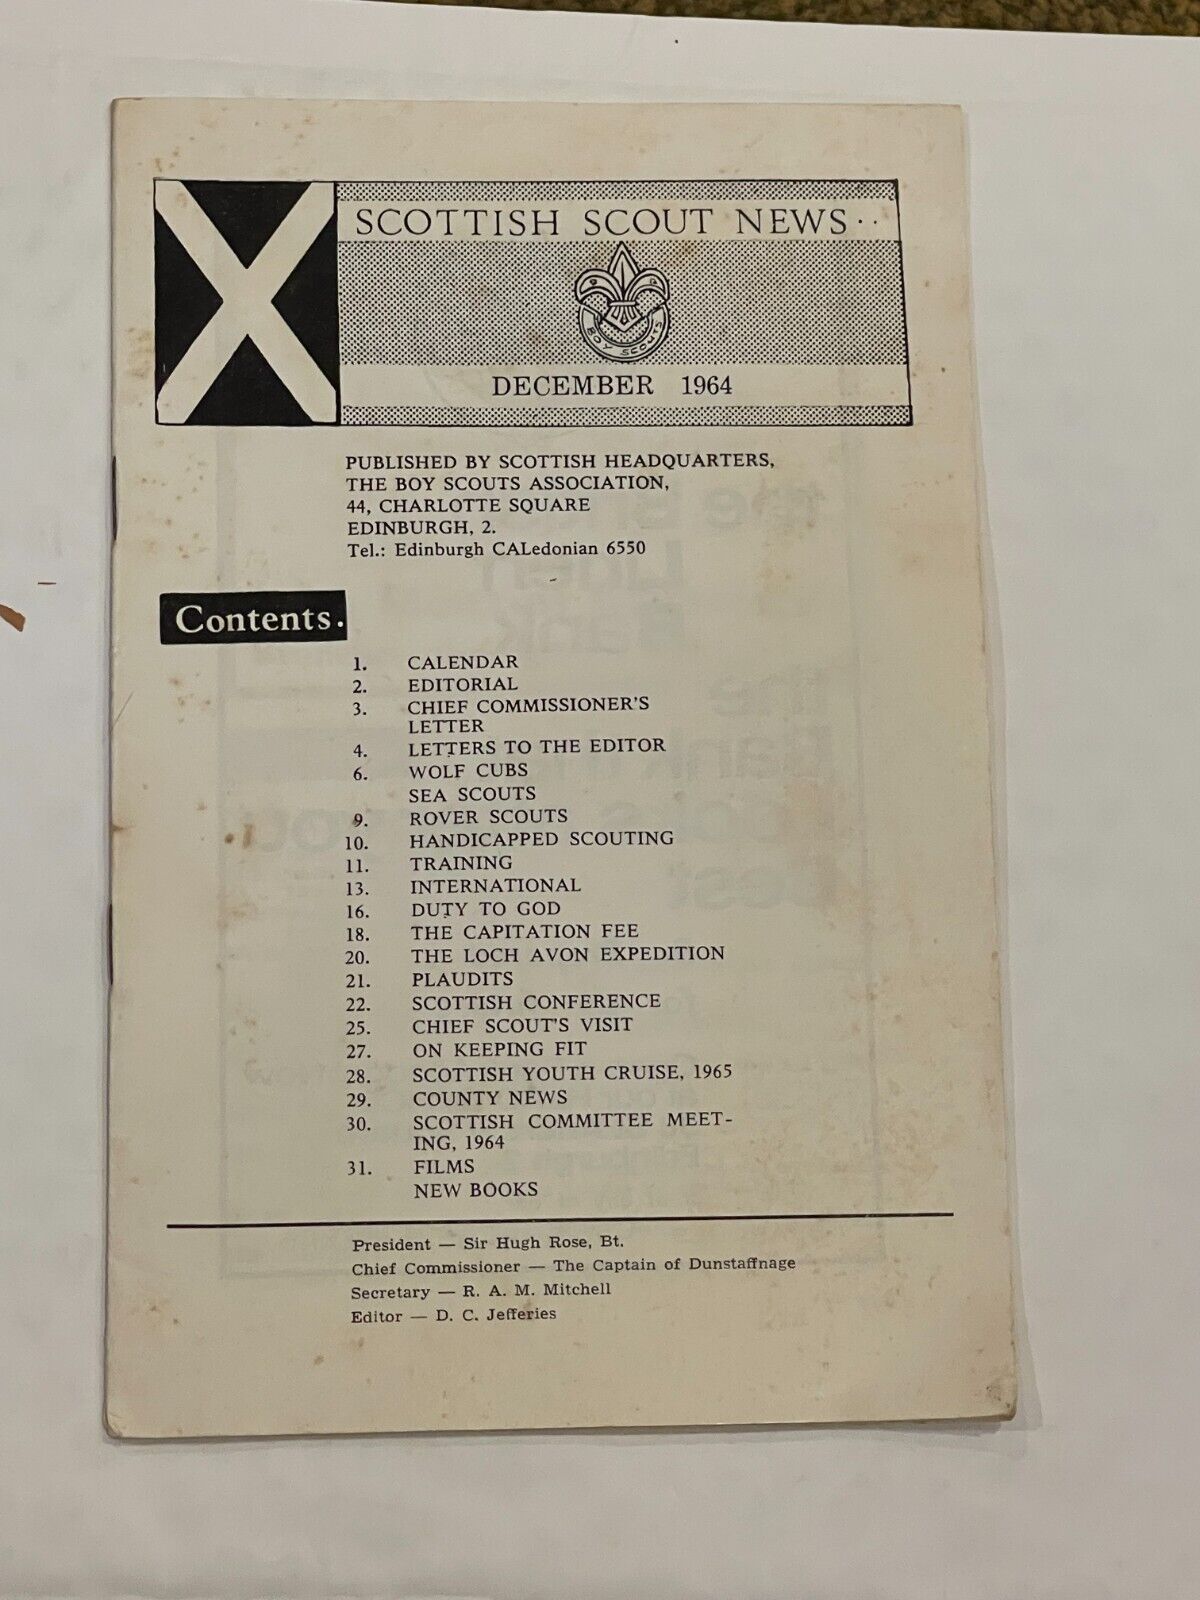 Scottish Scout News December 1964 pamphlet